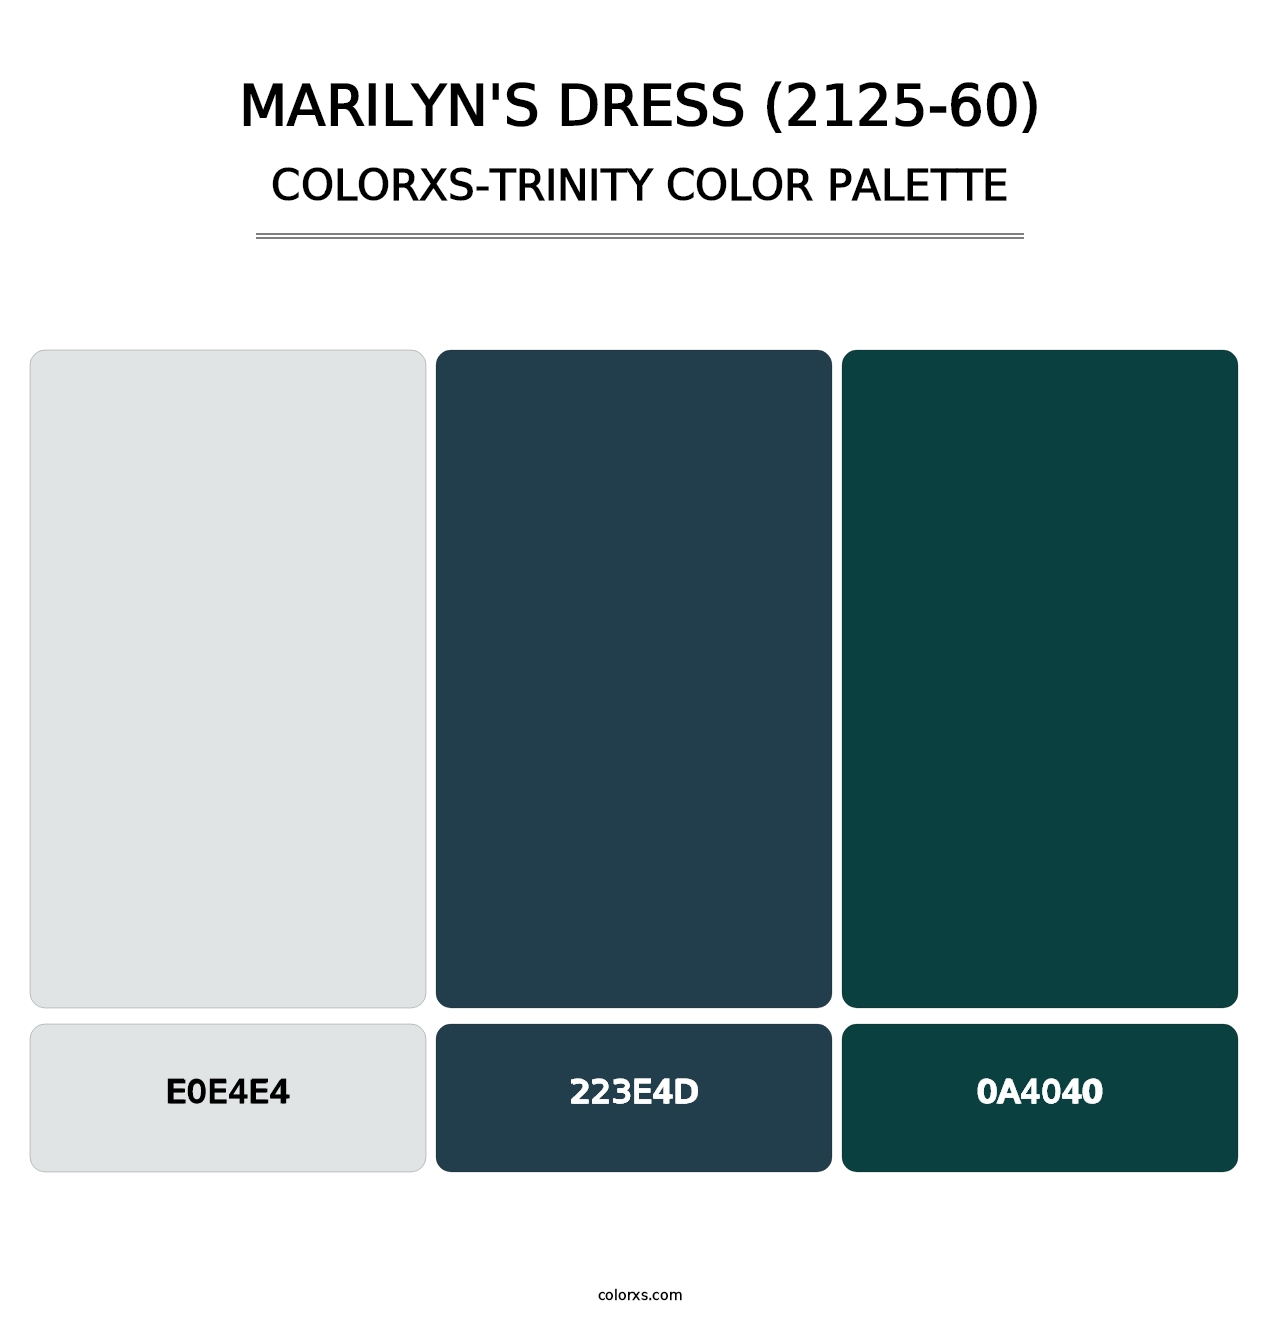 Marilyn's Dress (2125-60) - Colorxs Trinity Palette